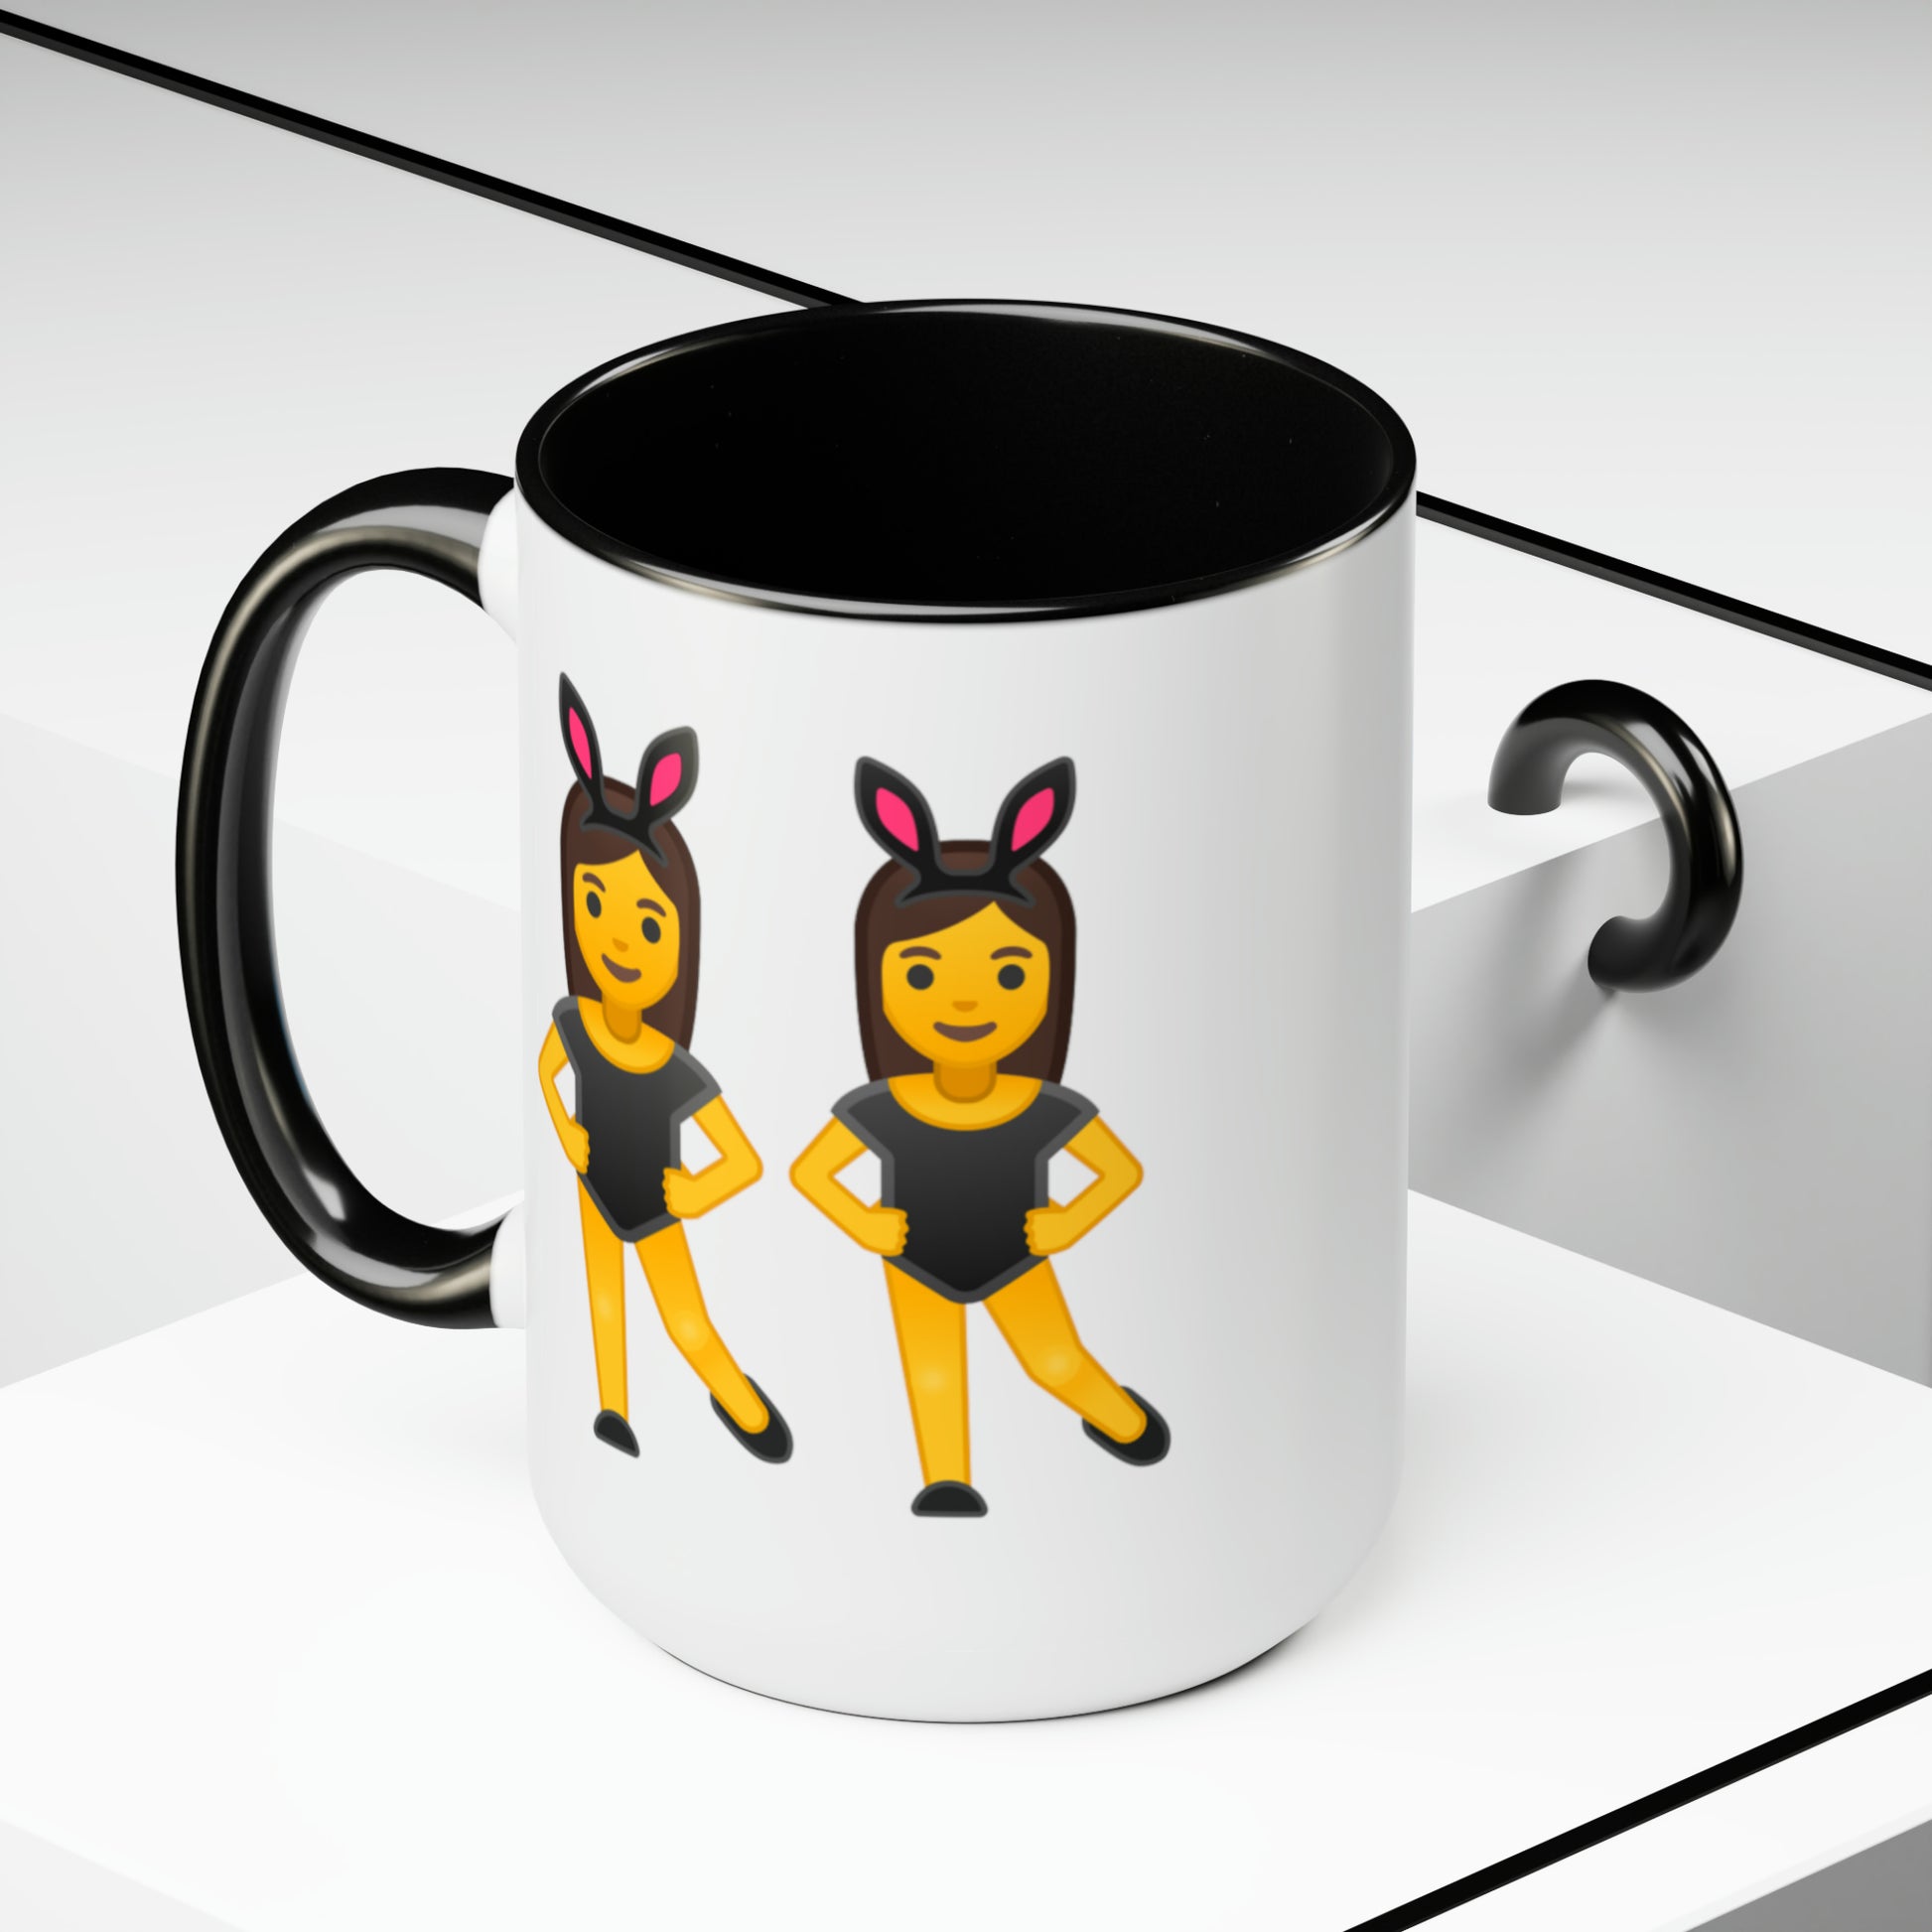 Twins Emoji Coffee Mugs - Double Sided Black Accent White Ceramic 15oz by TheGlassyLass